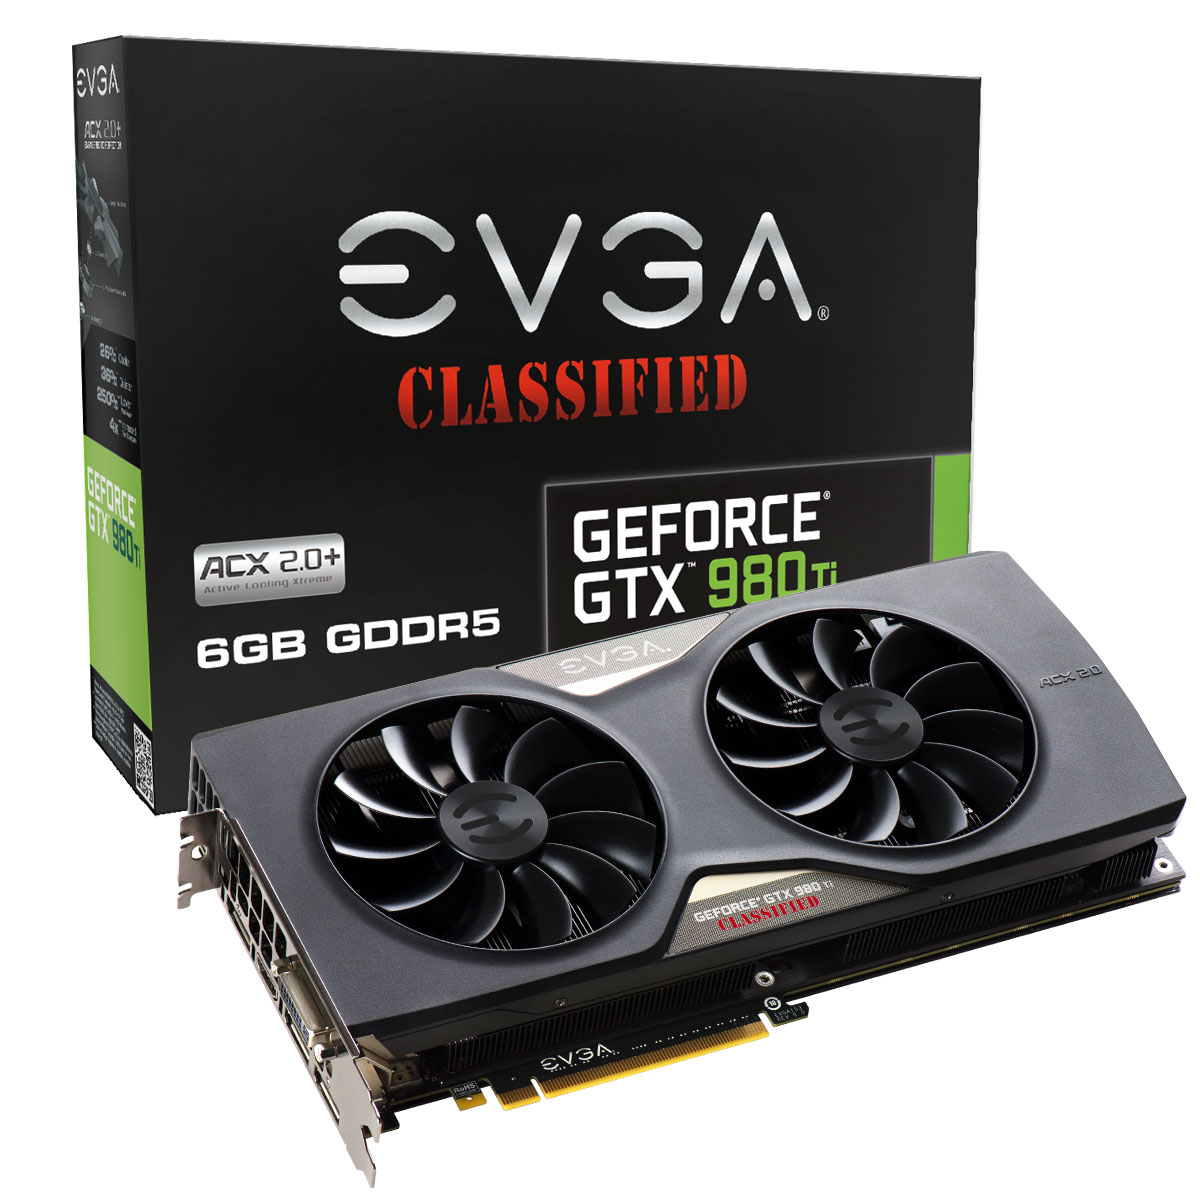 EVGA GeForce GTX 980 Ti Classified ACX 2.0+ announced 33